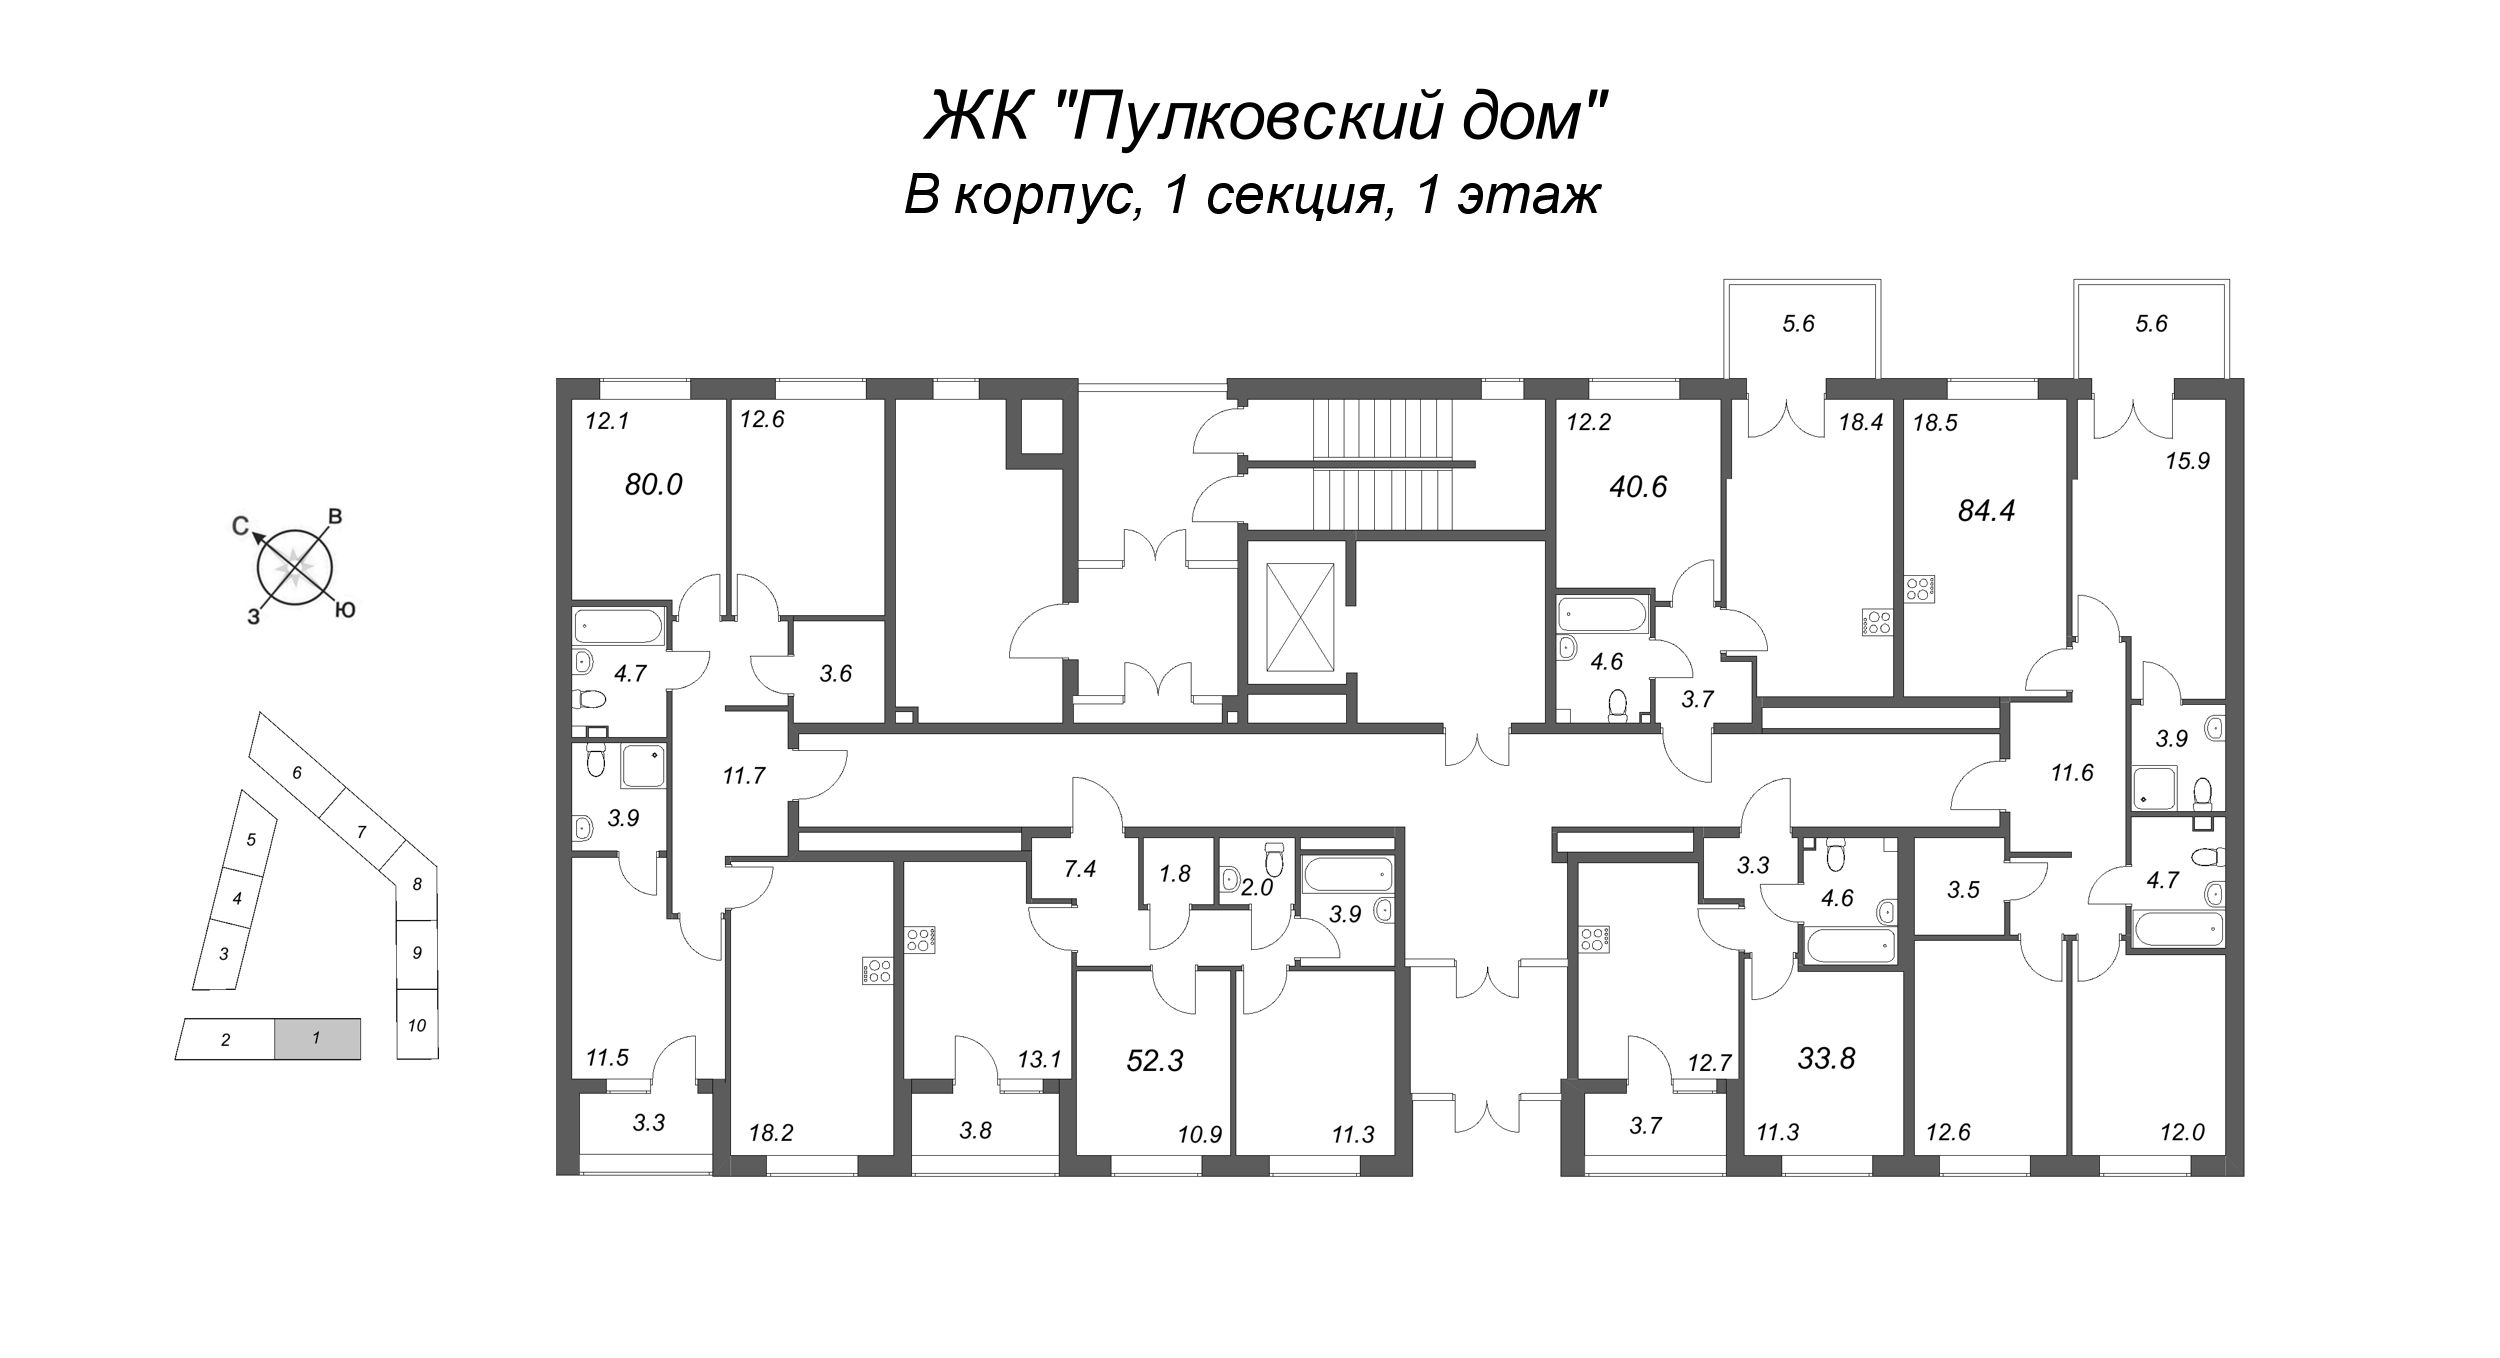 2-комнатная (Евро) квартира, 40.6 м² - планировка этажа